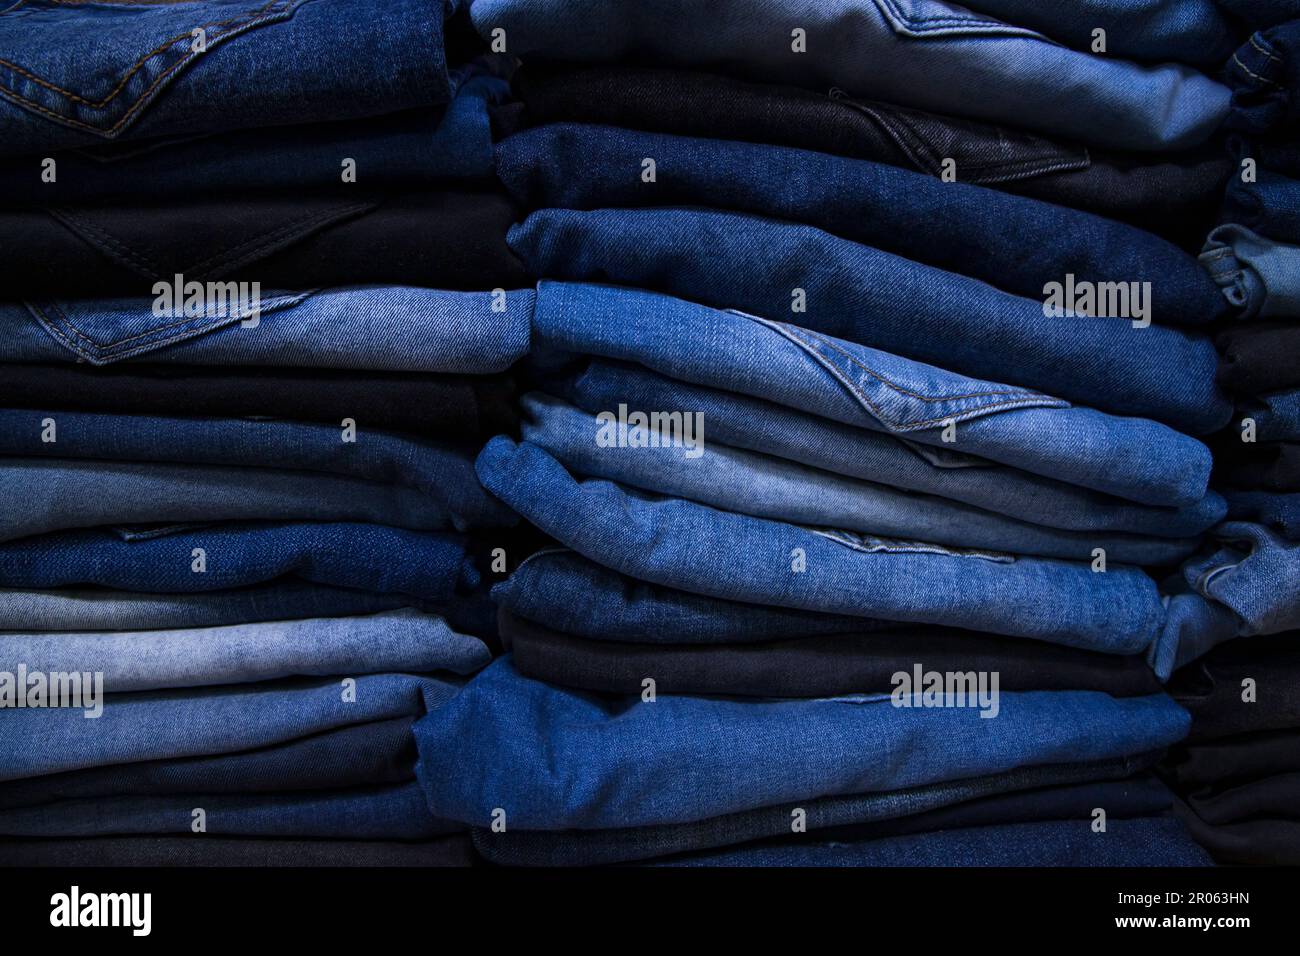 3840x2160 Resolution Elle Fanning Hot in Blue jeans 4K Wallpaper -  Wallpapers Den